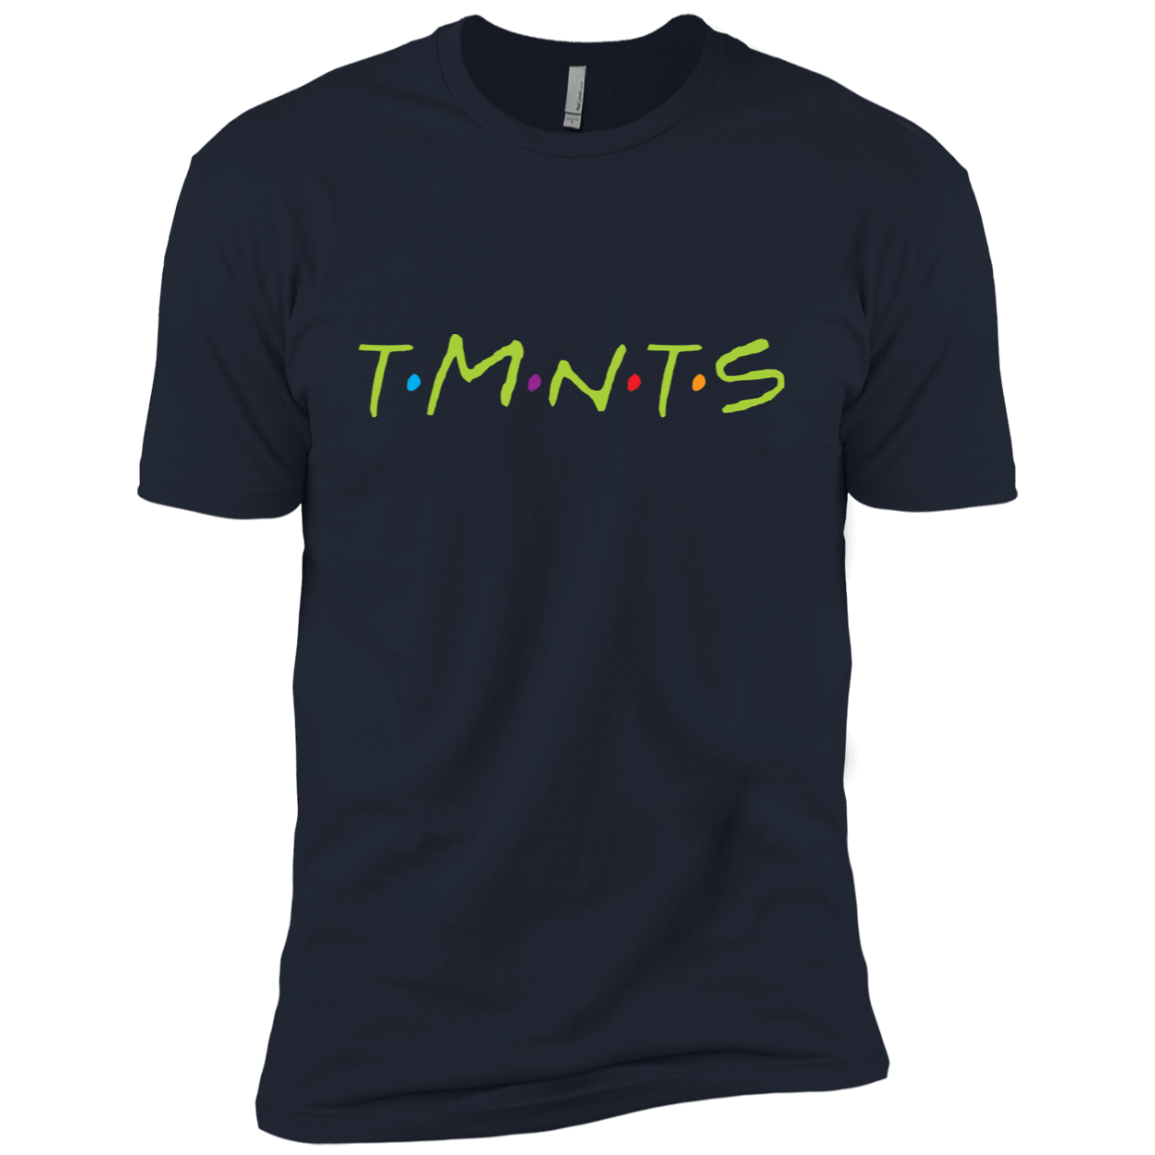 T-Shirts Midnight Navy / X-Small TMNTS Men's Premium T-Shirt